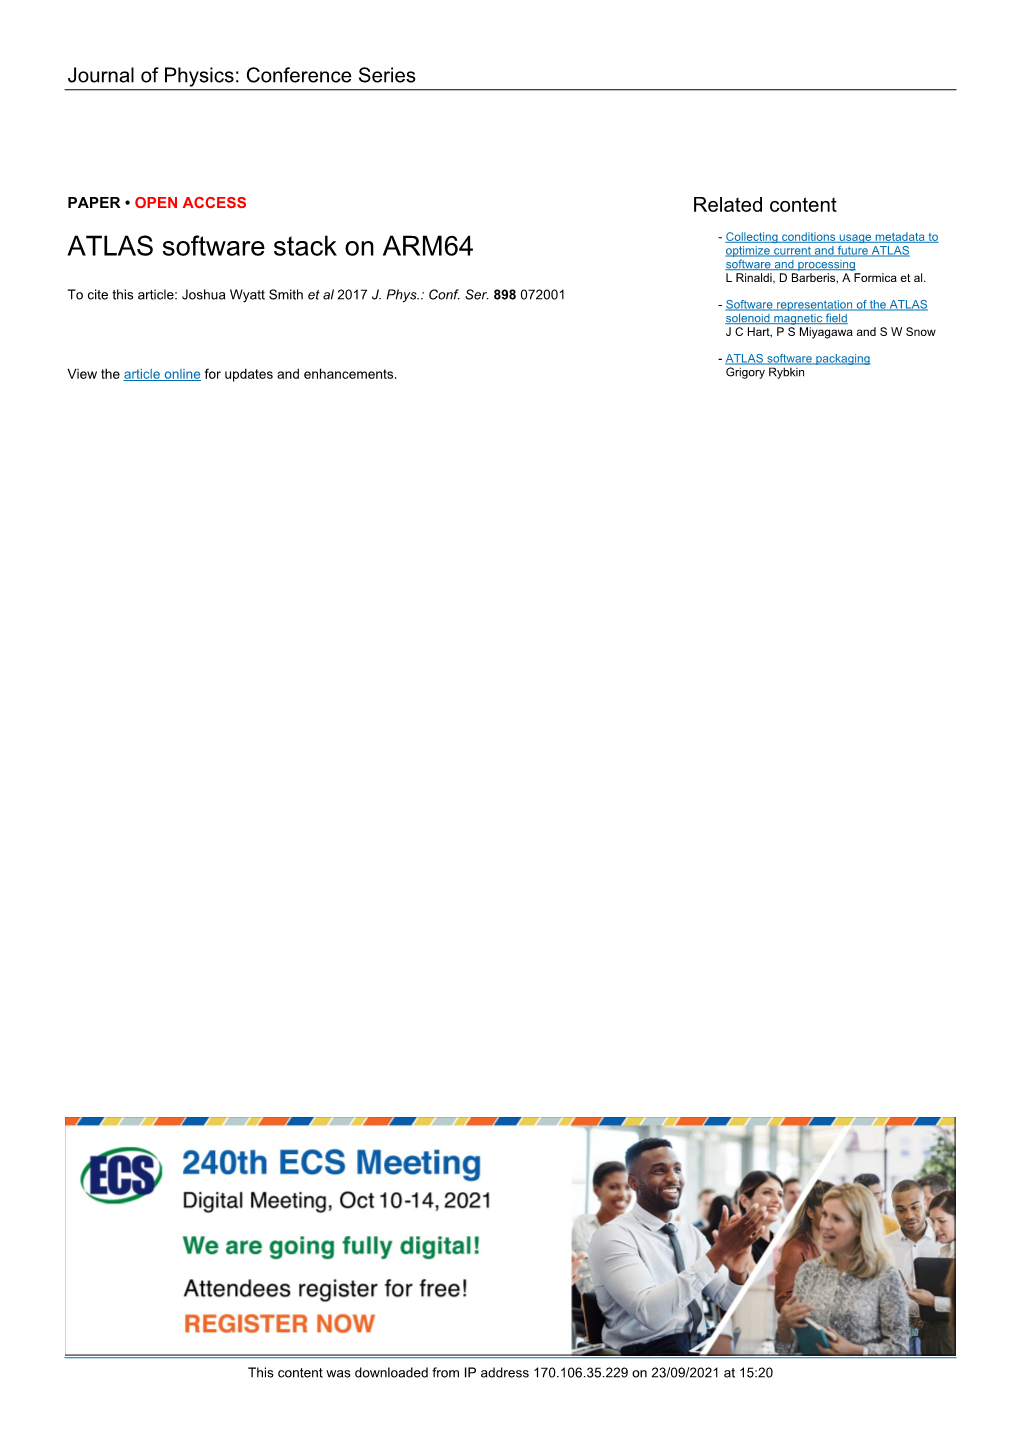 ATLAS Software Stack on ARM64 Optimize Current and Future ATLAS Software and Processing L Rinaldi, D Barberis, a Formica Et Al